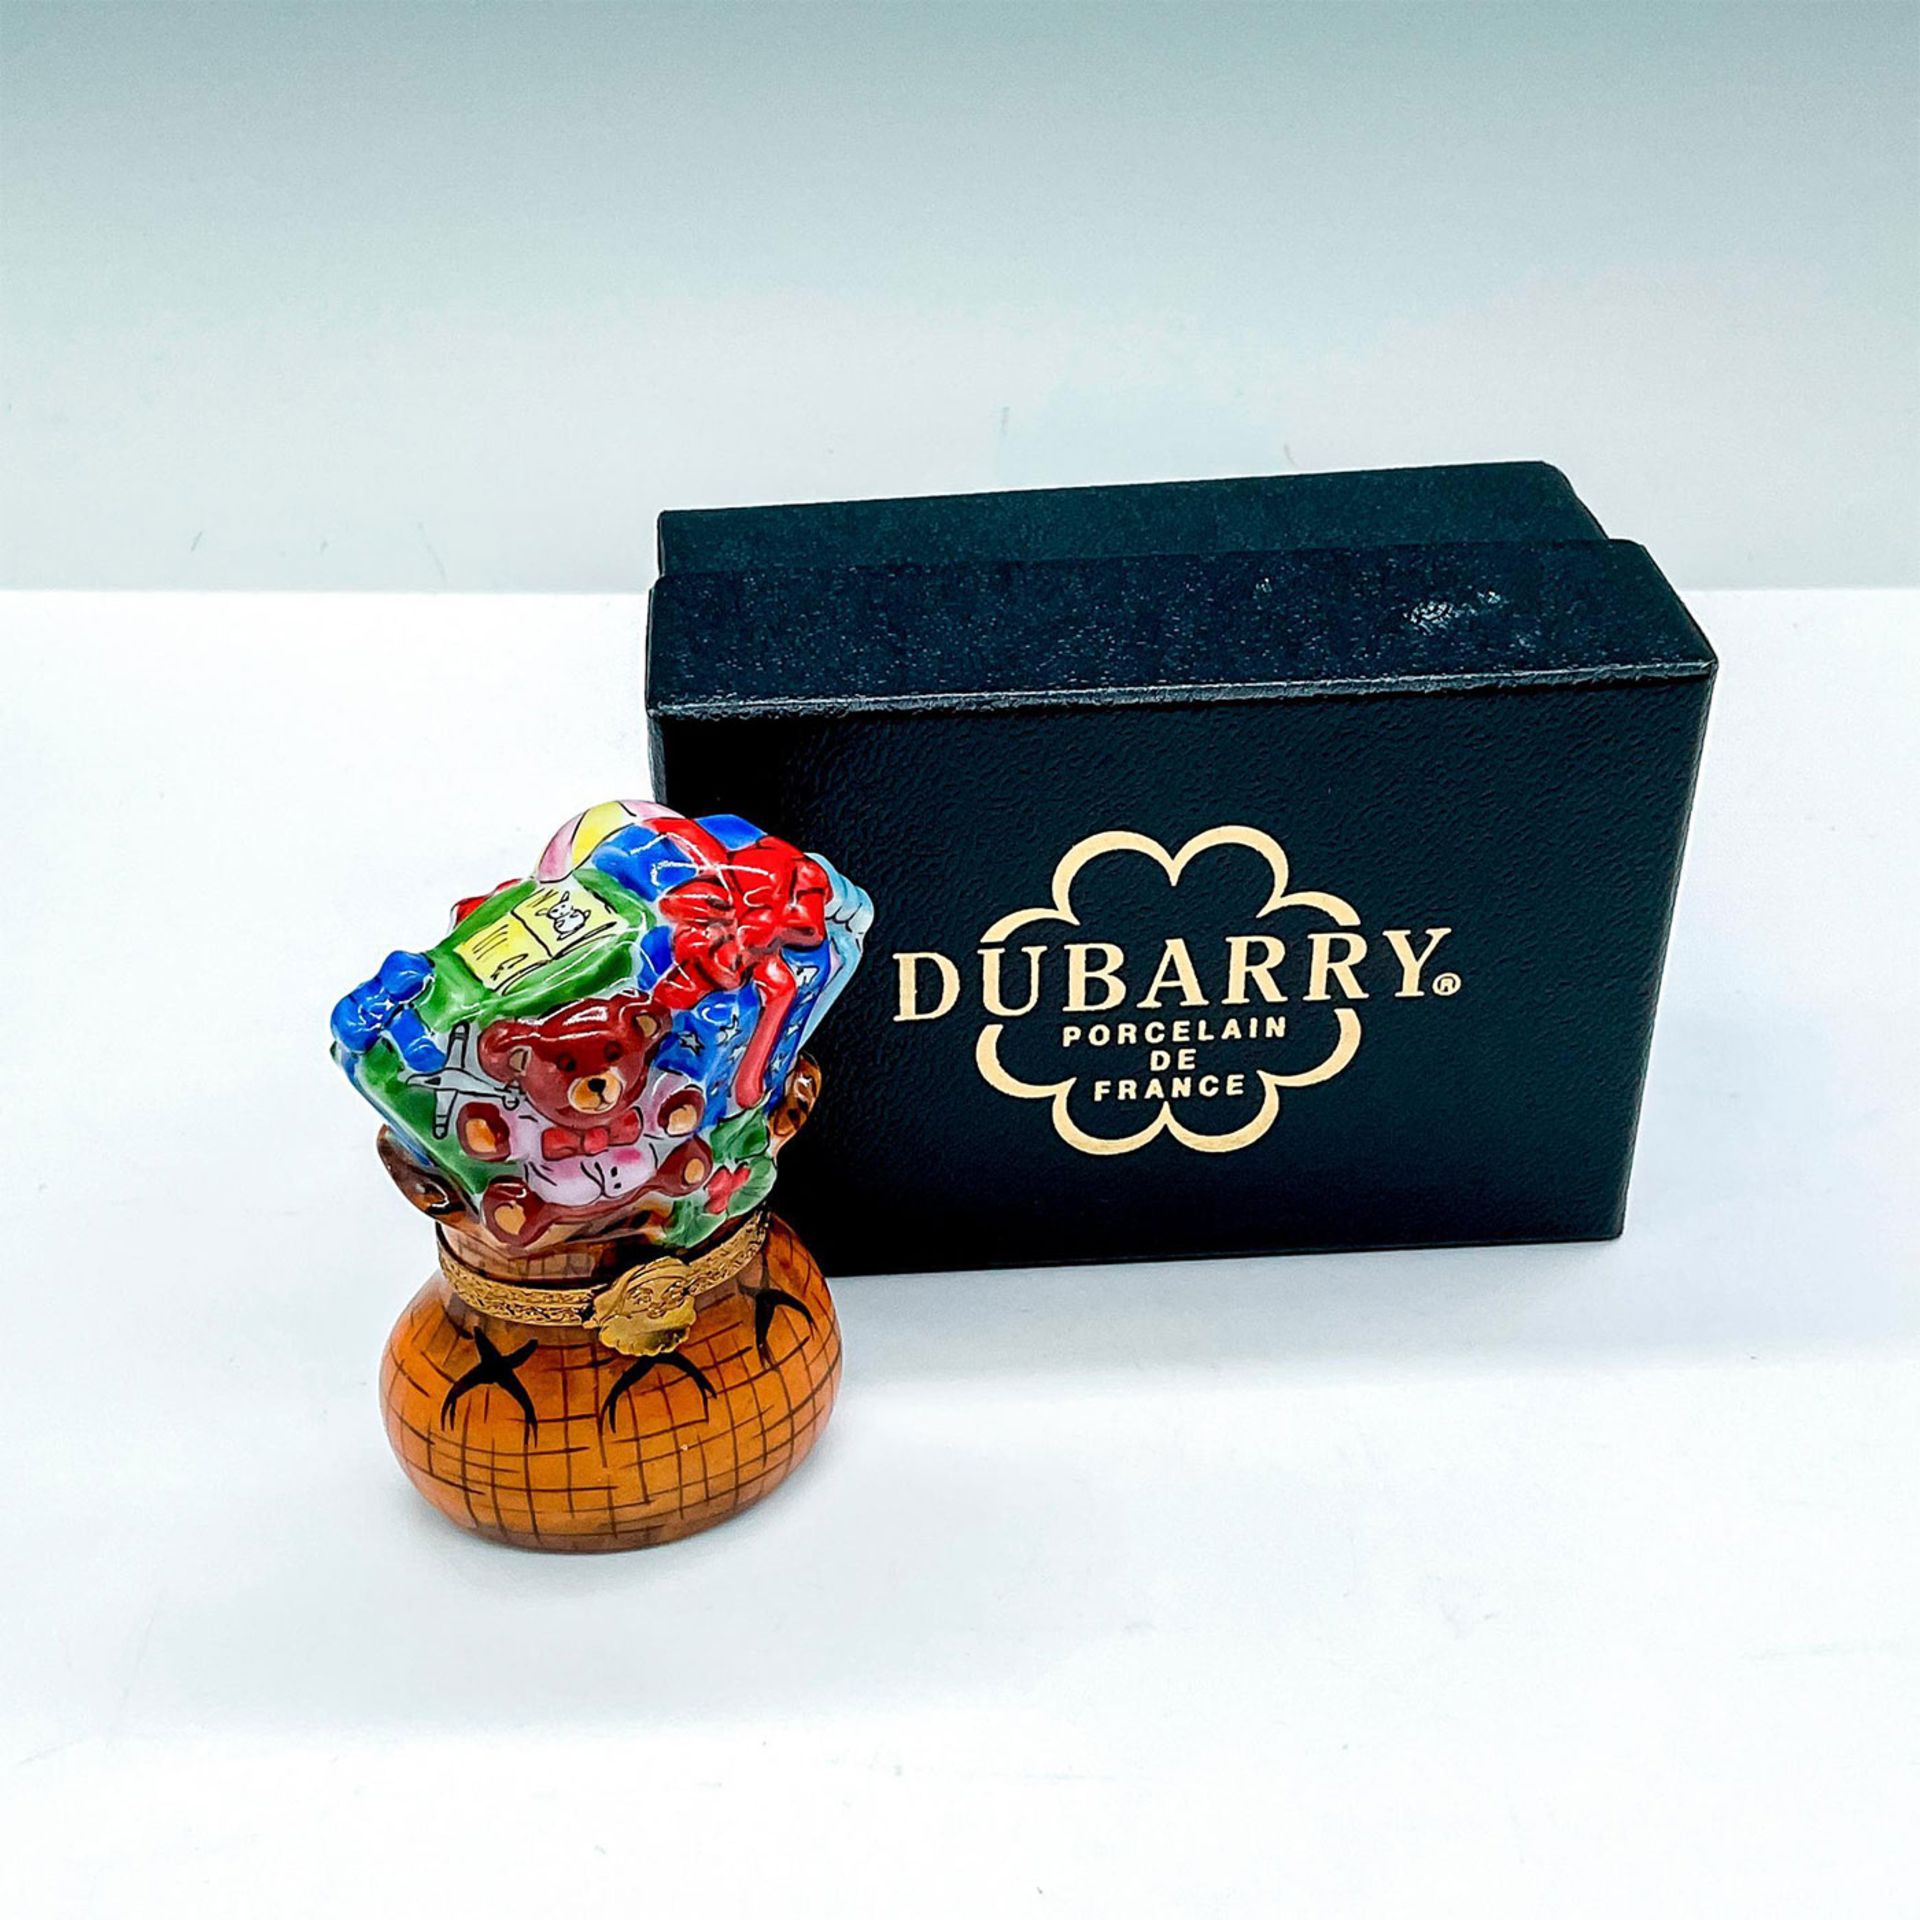 Dubarry Limoges Porcelain Charm Box, Basket of Gifts - Image 4 of 4